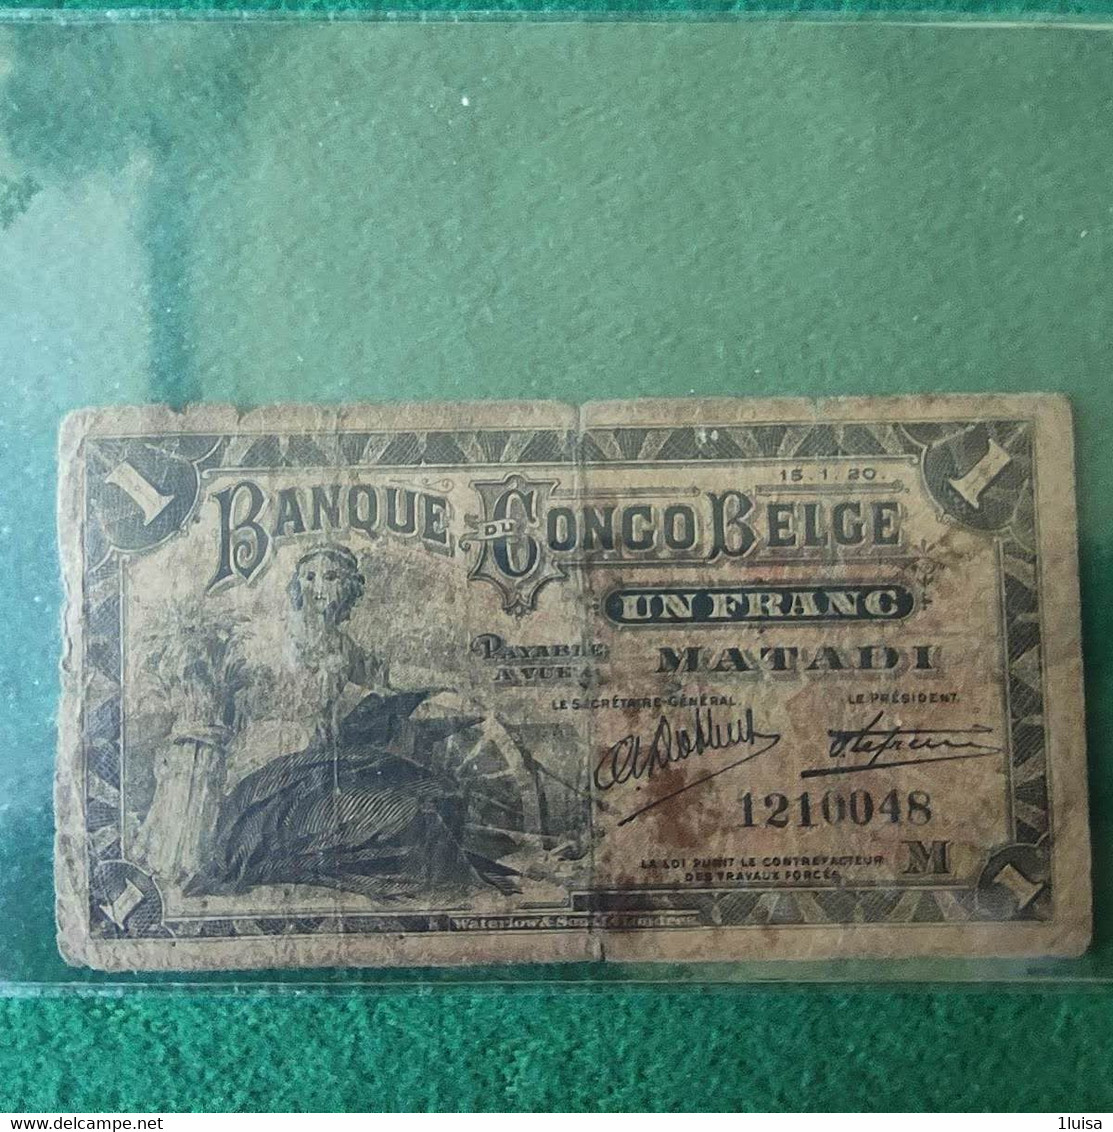 CONGO BELGA 1 FRANC 1920 - Banco De Congo Belga